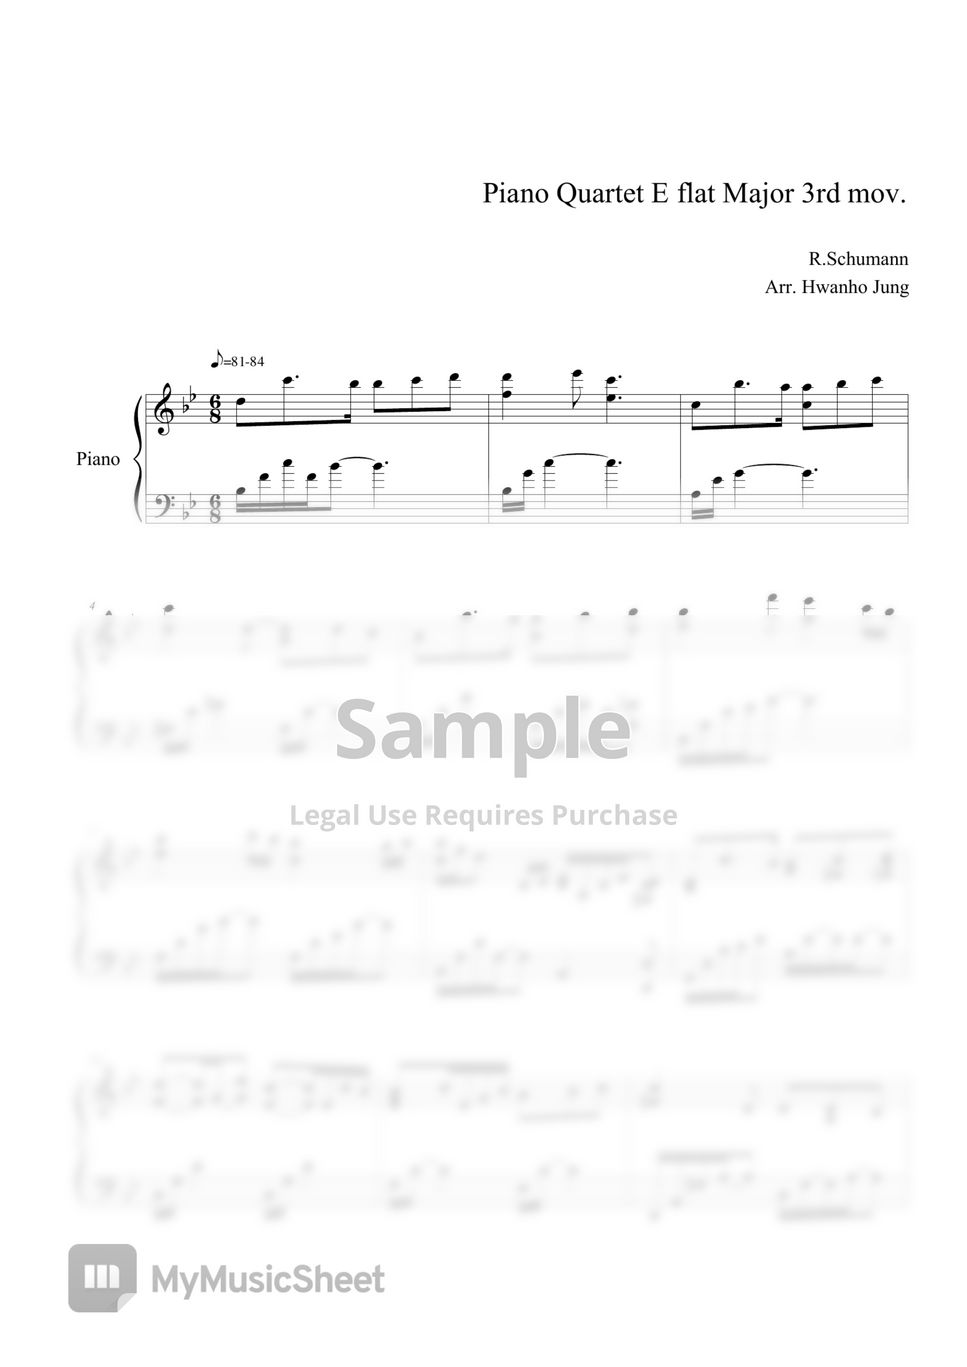 R.Schumann - Piano Quartet E flat Major 3rd mov. (Piano Arrangement) by Hwan ho Jung